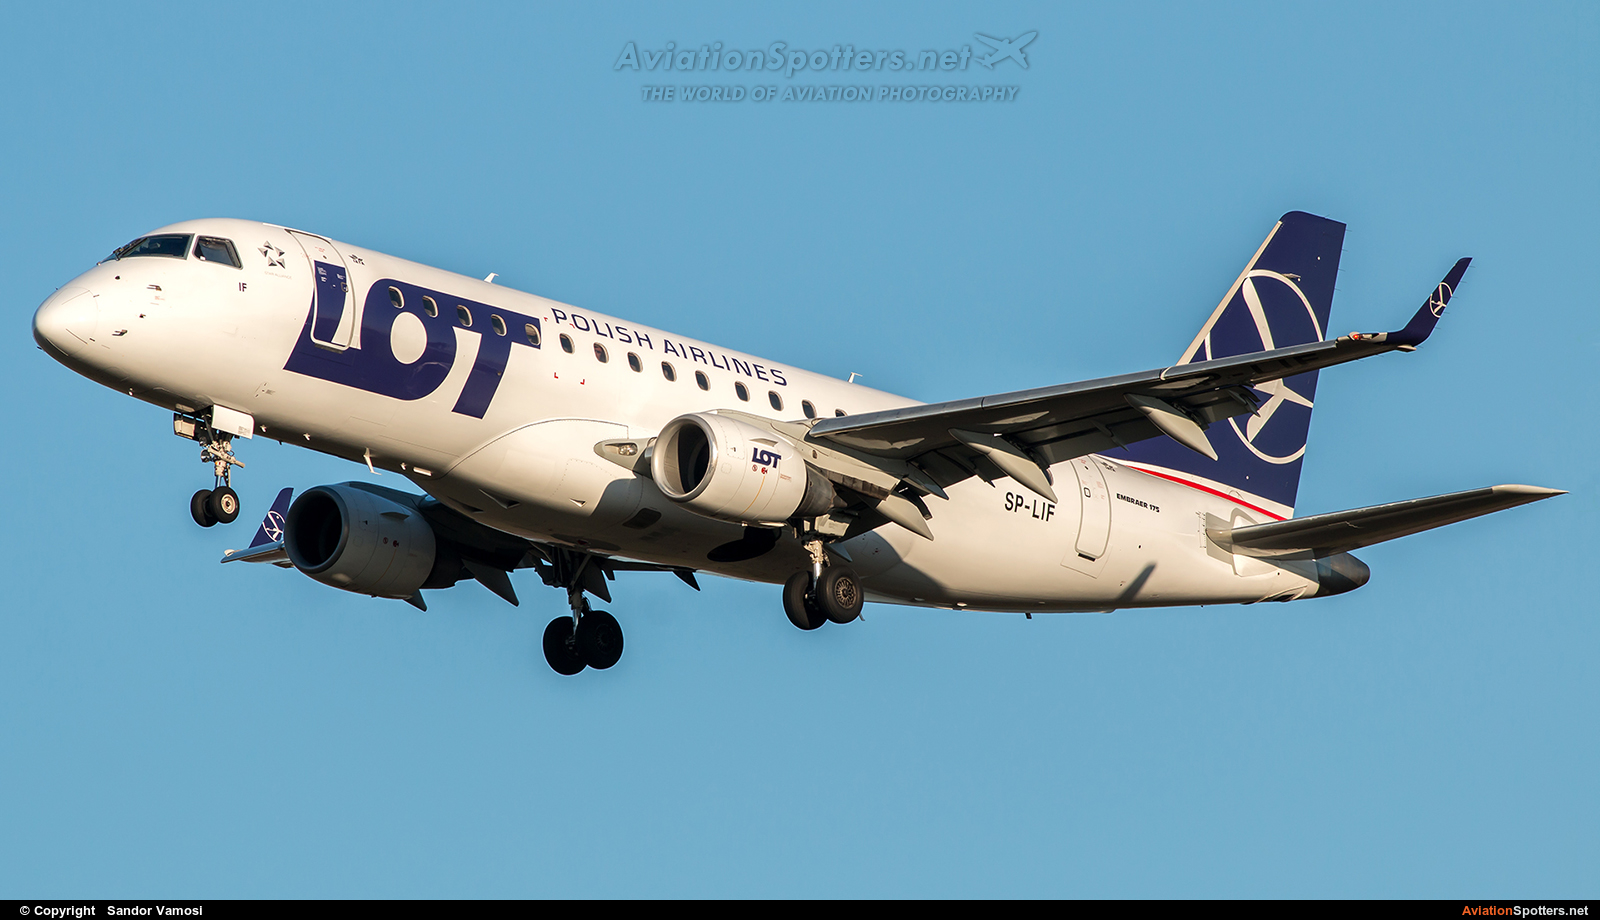 LOT - Polish Airlines  -  175LR  (SP-LIF) By Sandor Vamosi (ALEX67)